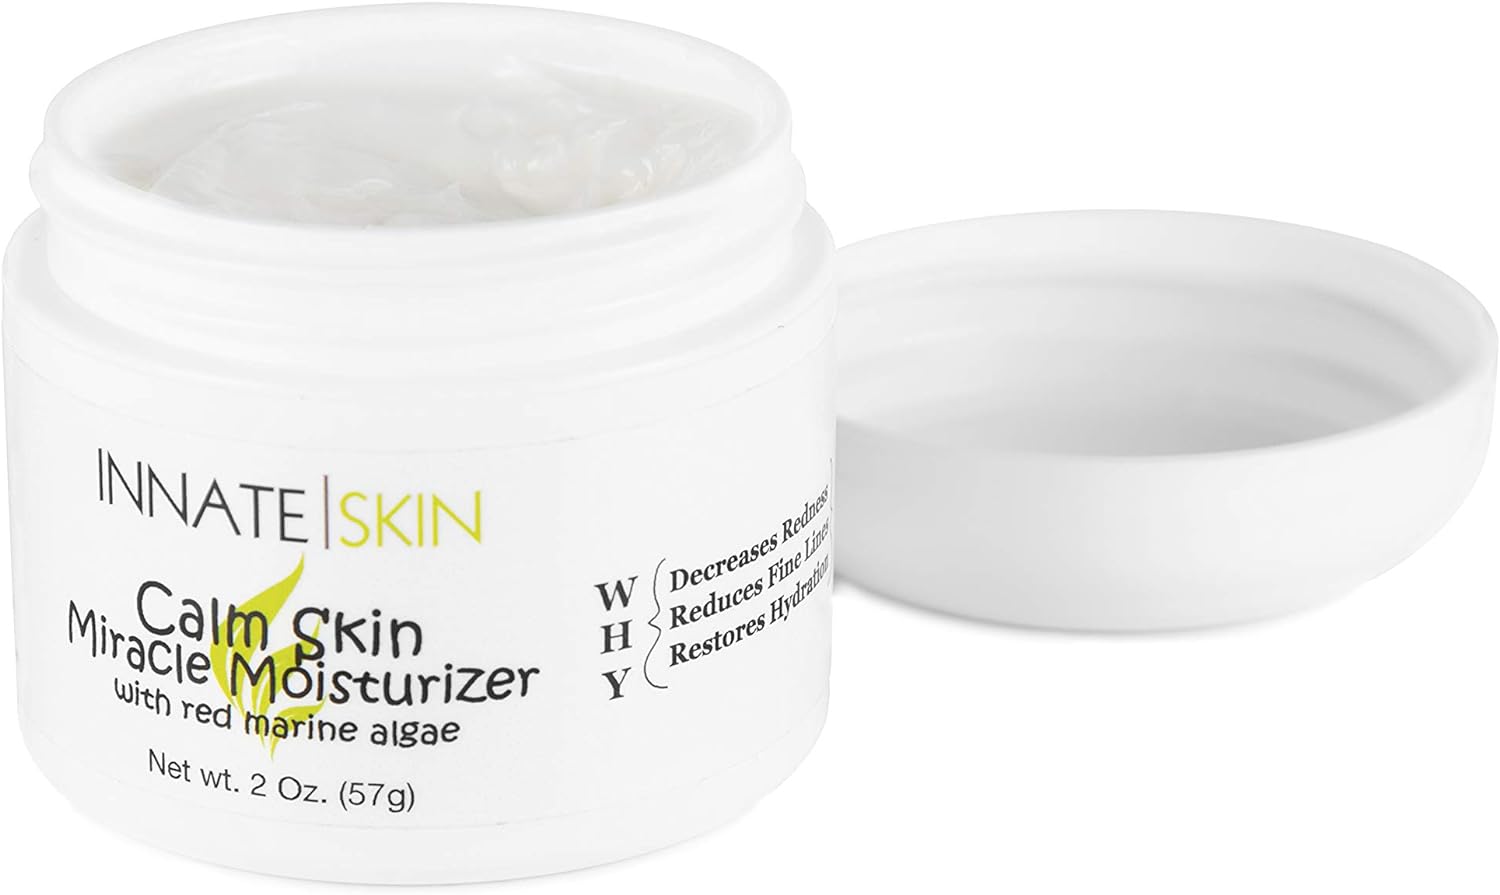 Calm Skin Miracle Moisturizer with Marine Algae  Clear Skin Vitamin Capsules w/Pantothenic Acid B5, Zinc Picolinate, Vitex Chasteberry 60 Count by Innate Skin